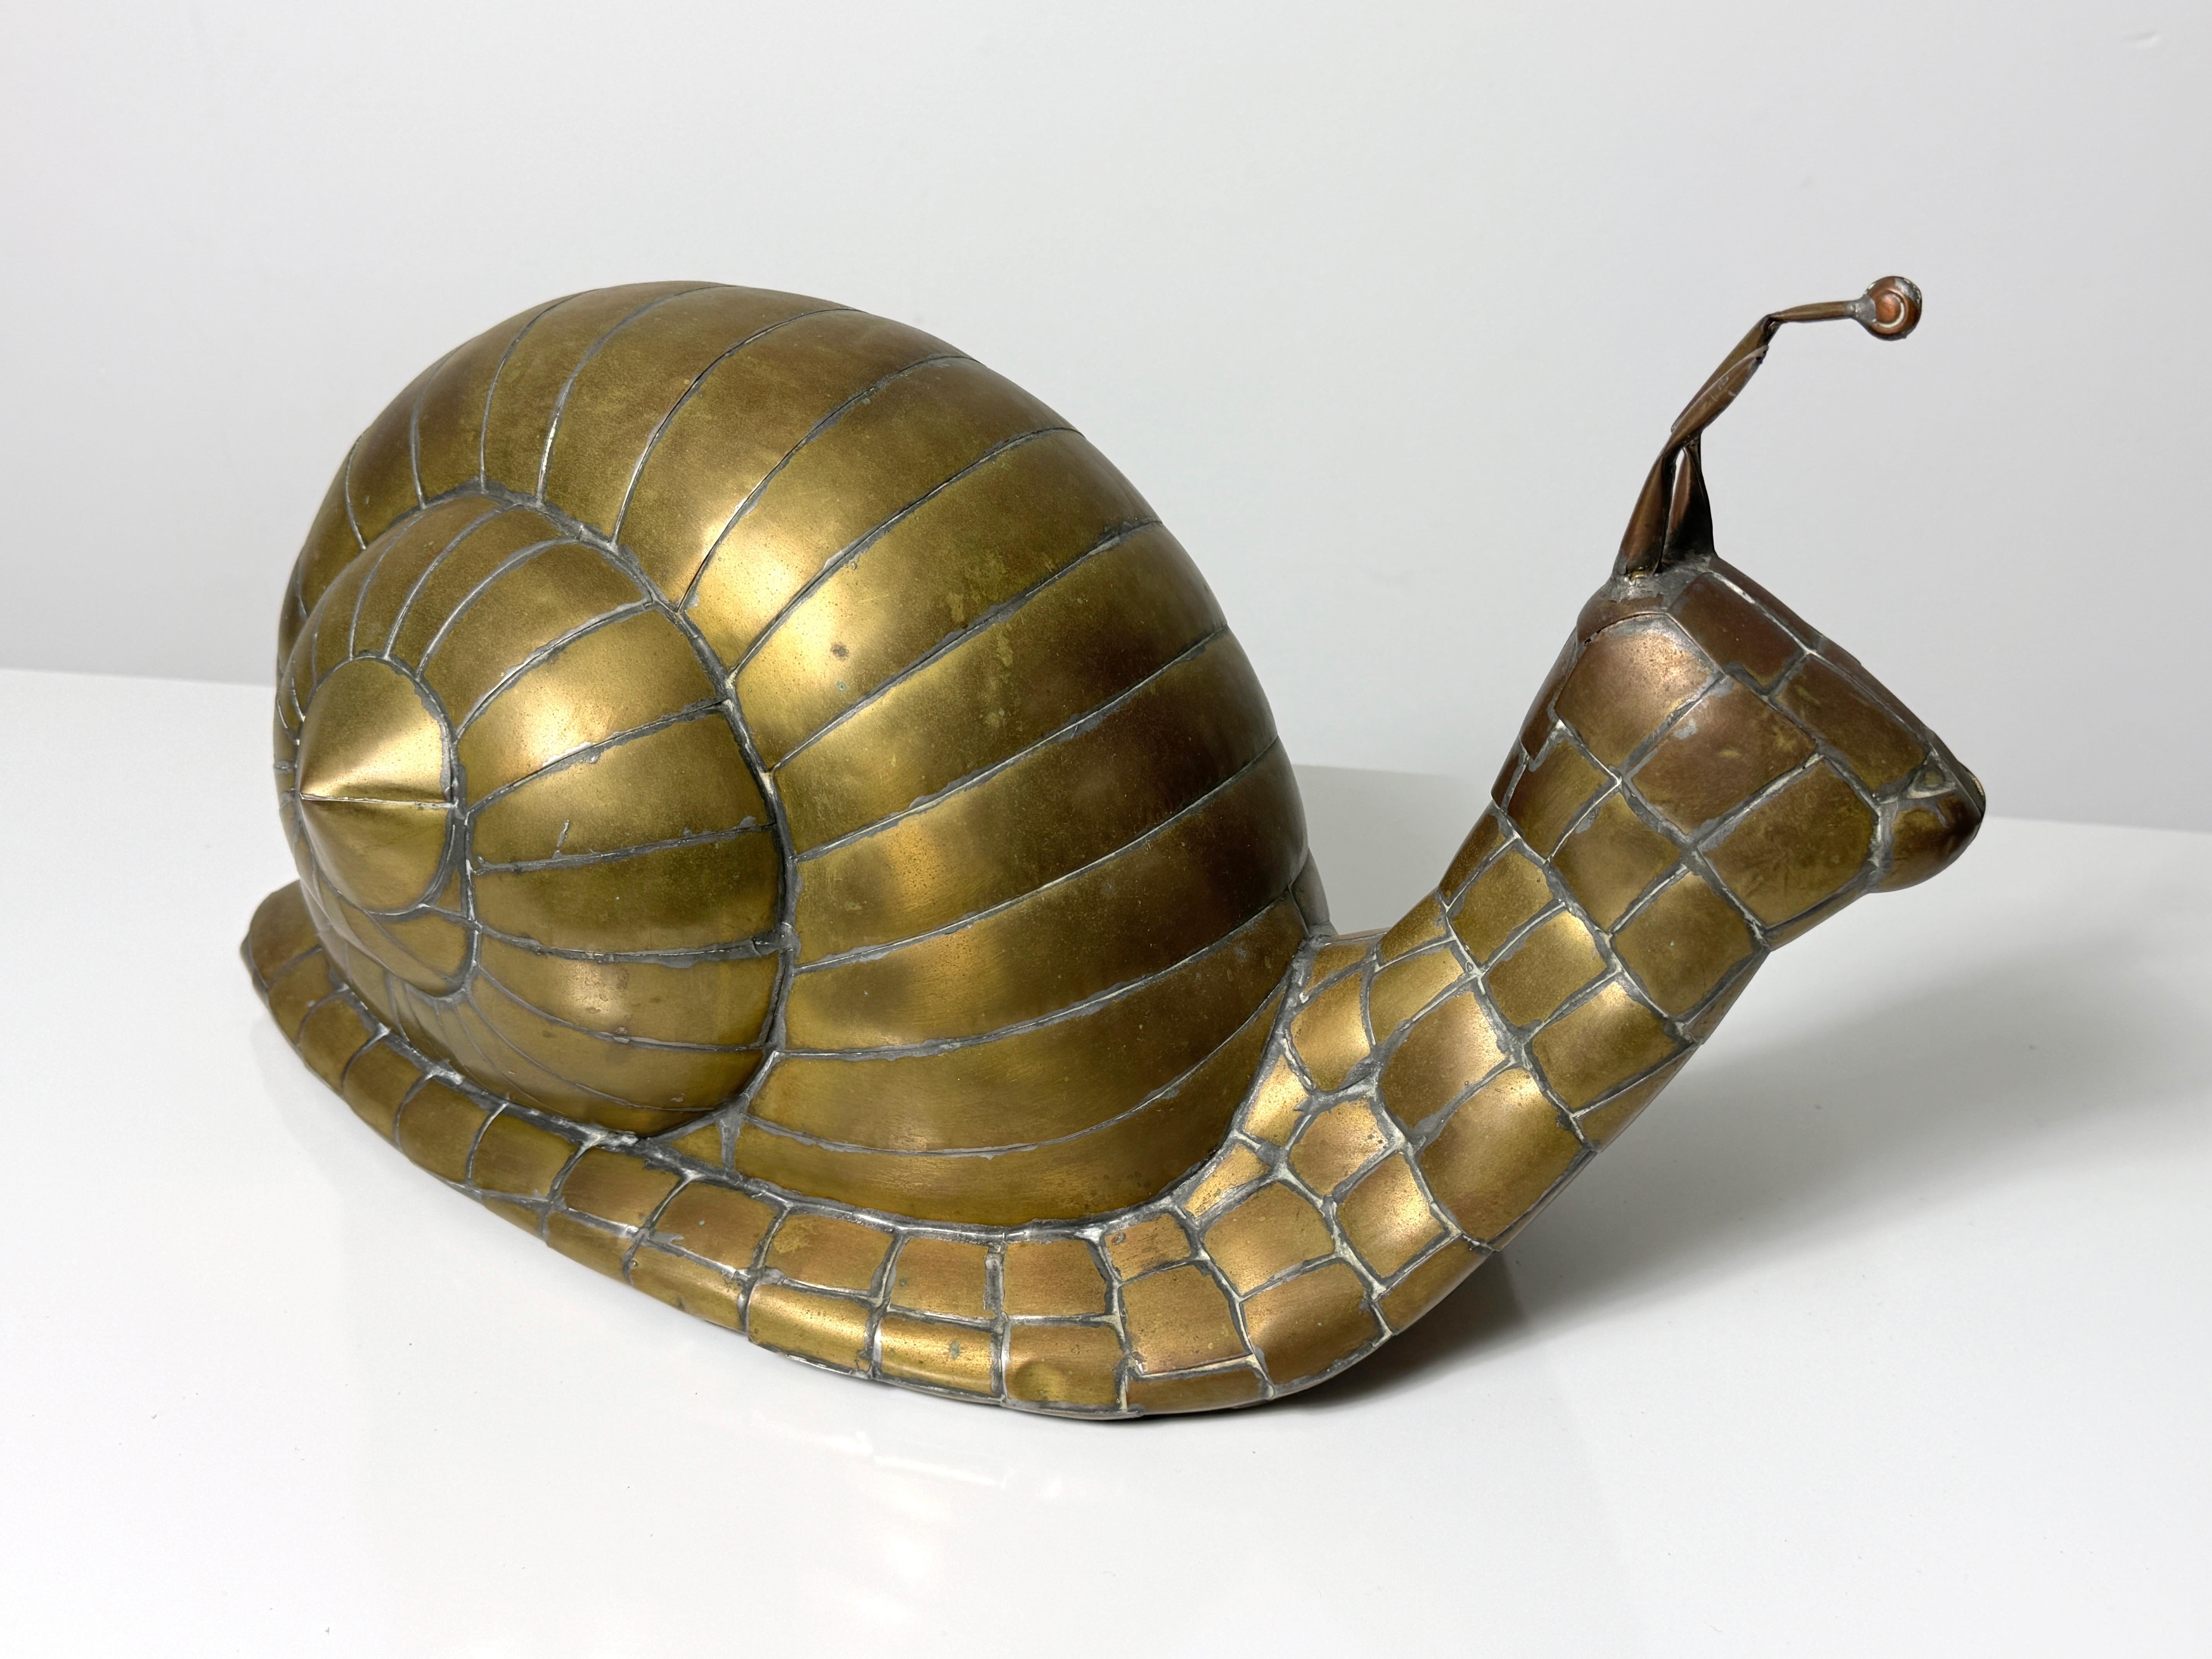 Vintage Sergio Bustamante Brass Snail Sculpture Mexico Mid Century Modern 1970s For Sale 3